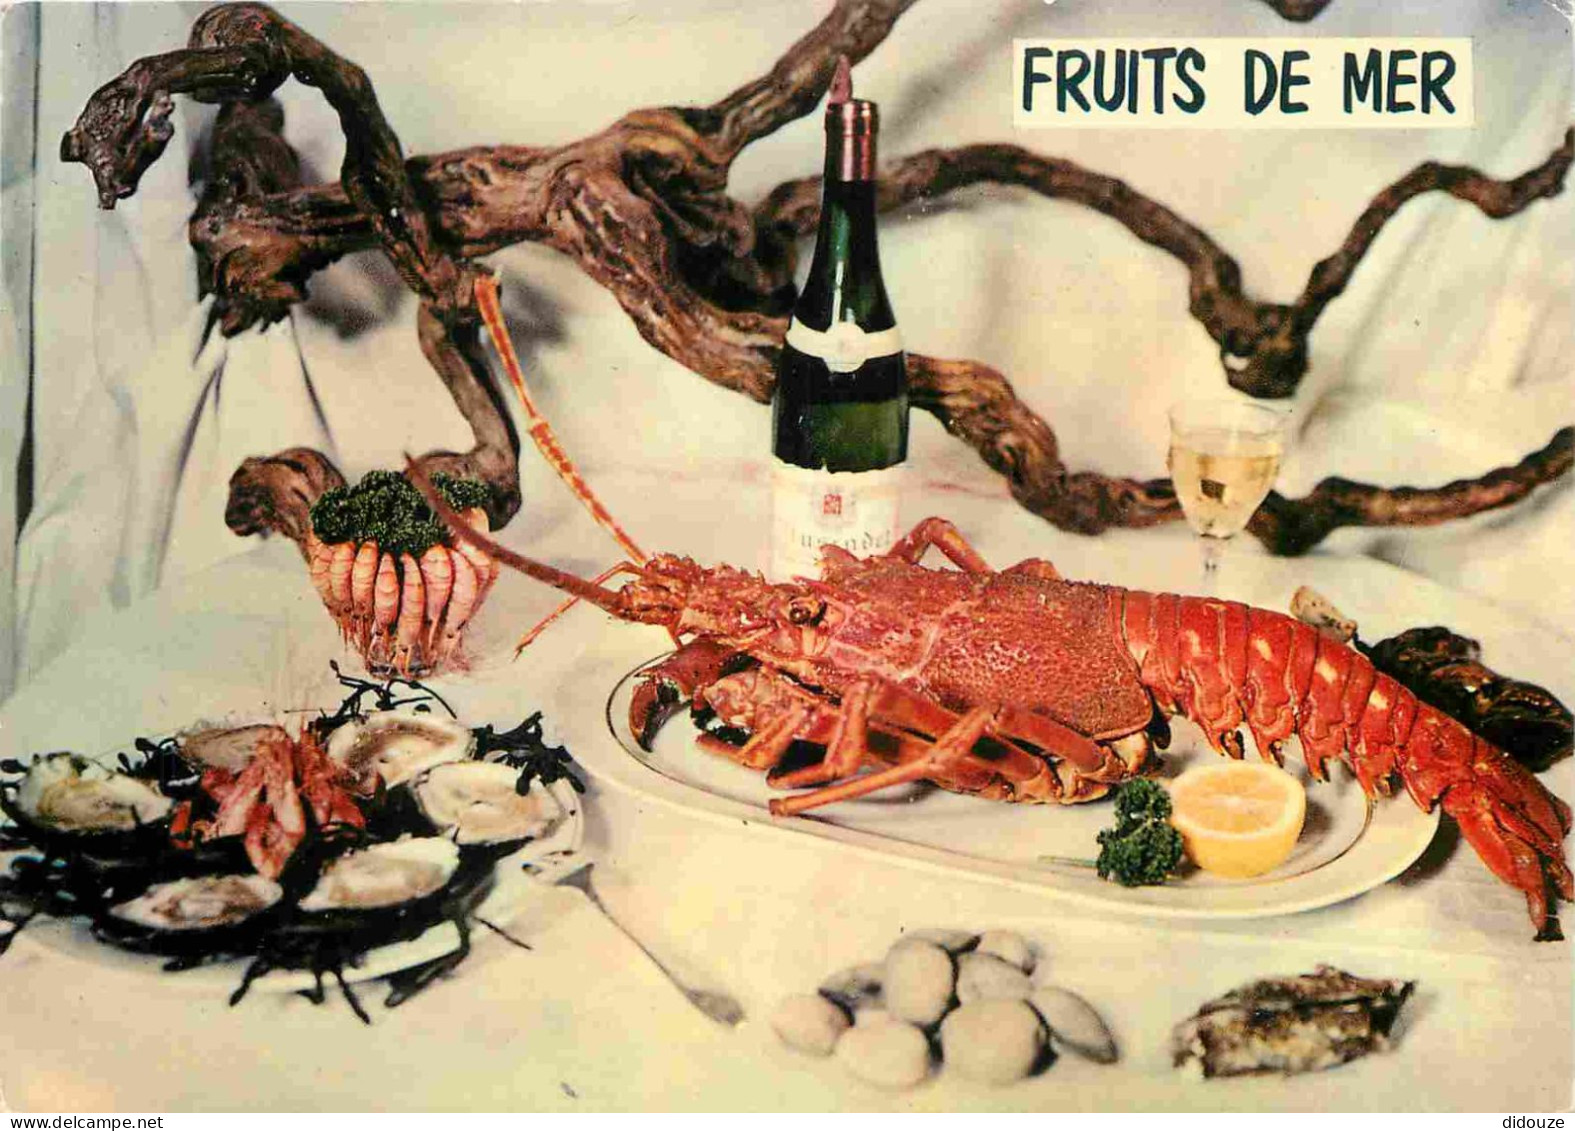 Recettes De Cuisine - Fruits De Mer - Gastronomie - CPM - Voir Scans Recto-Verso - Recepten (kook)